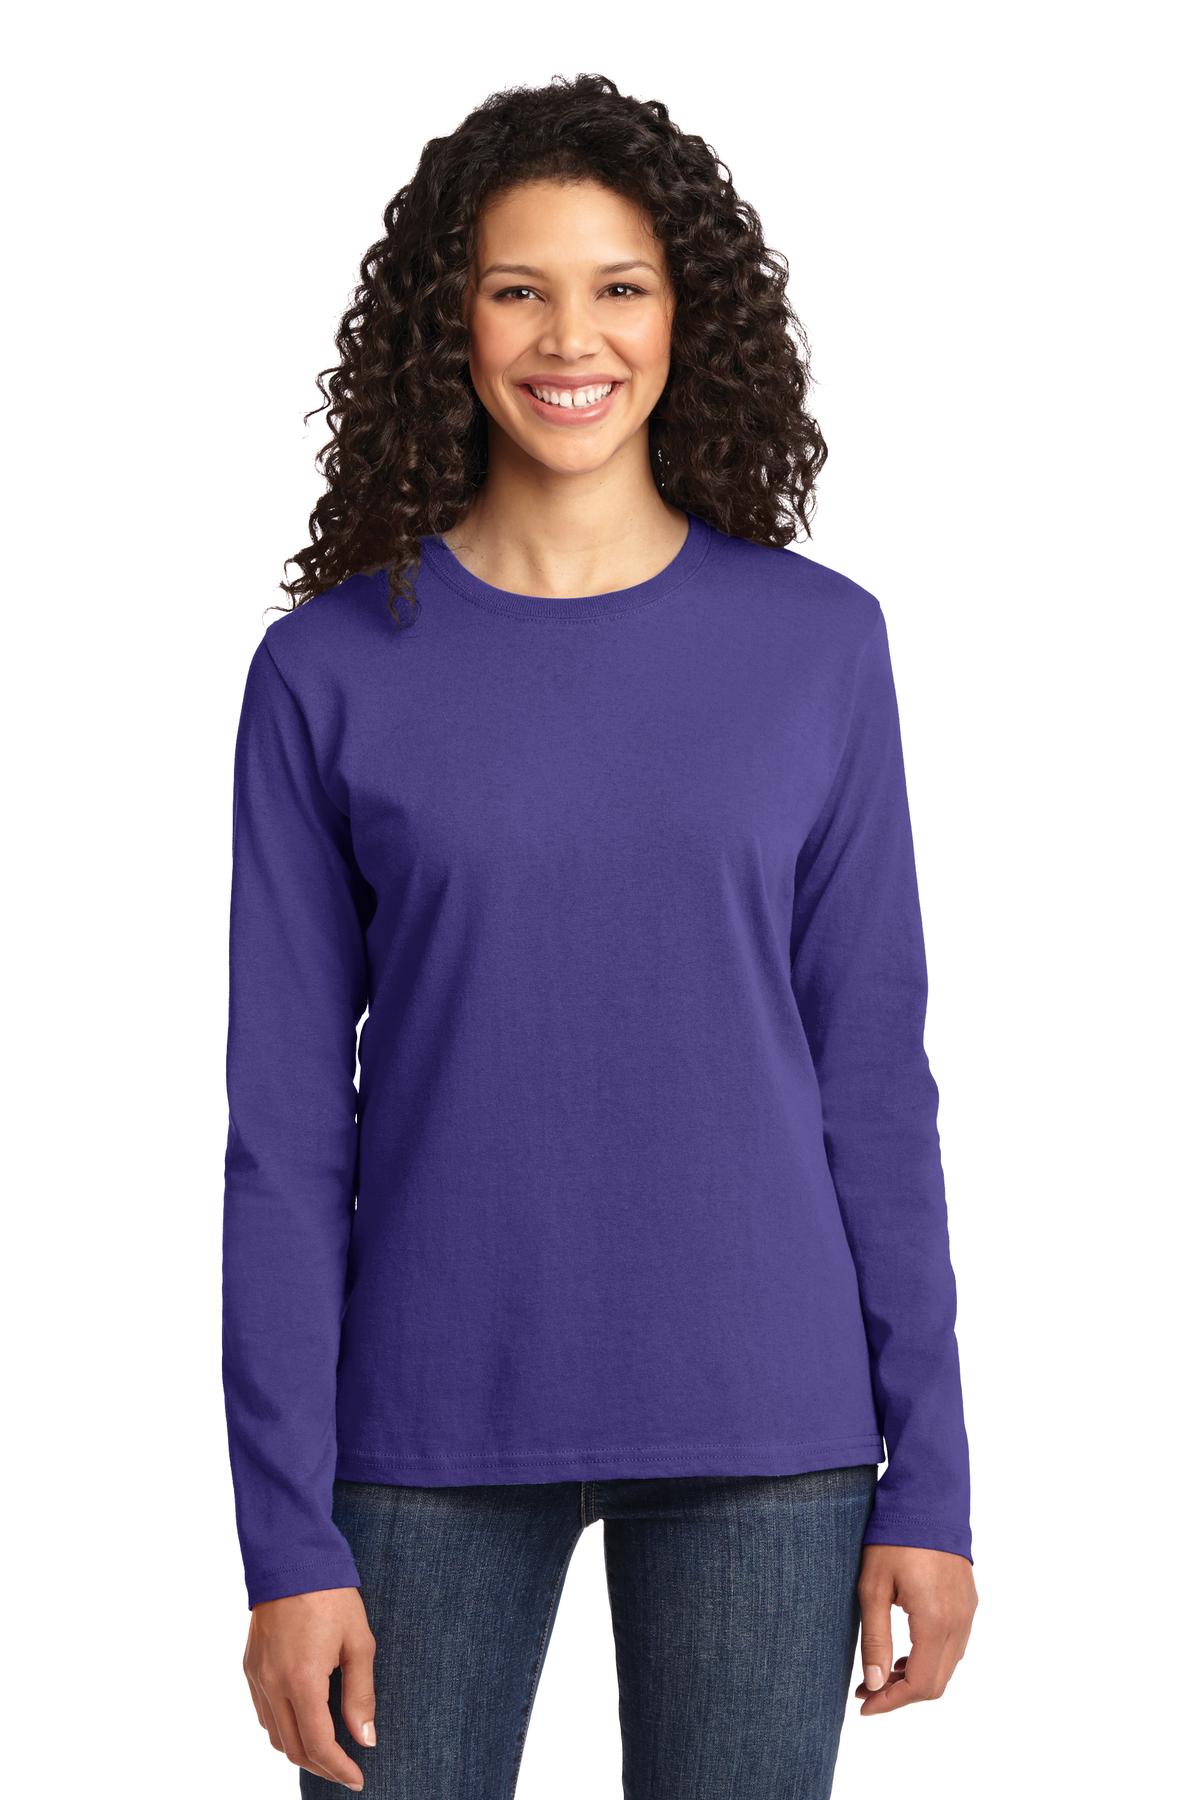 Port & Company Long Sleeve 54oz 100% Cotton TShirt (LPC54LS) Purple, XL - image 1 of 6